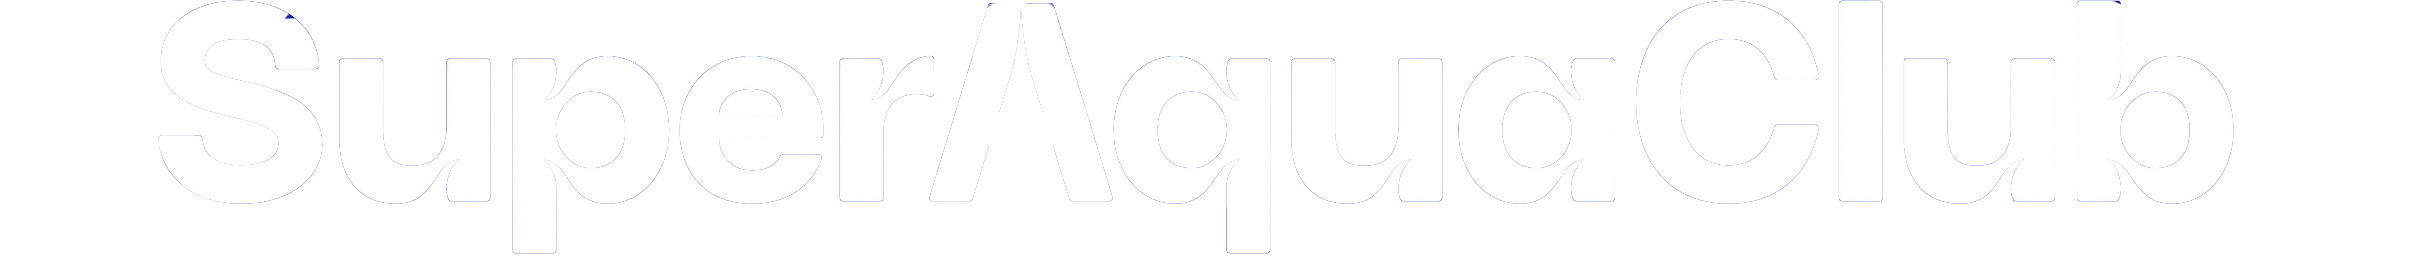 LocketGo-white logo of superaquaclub